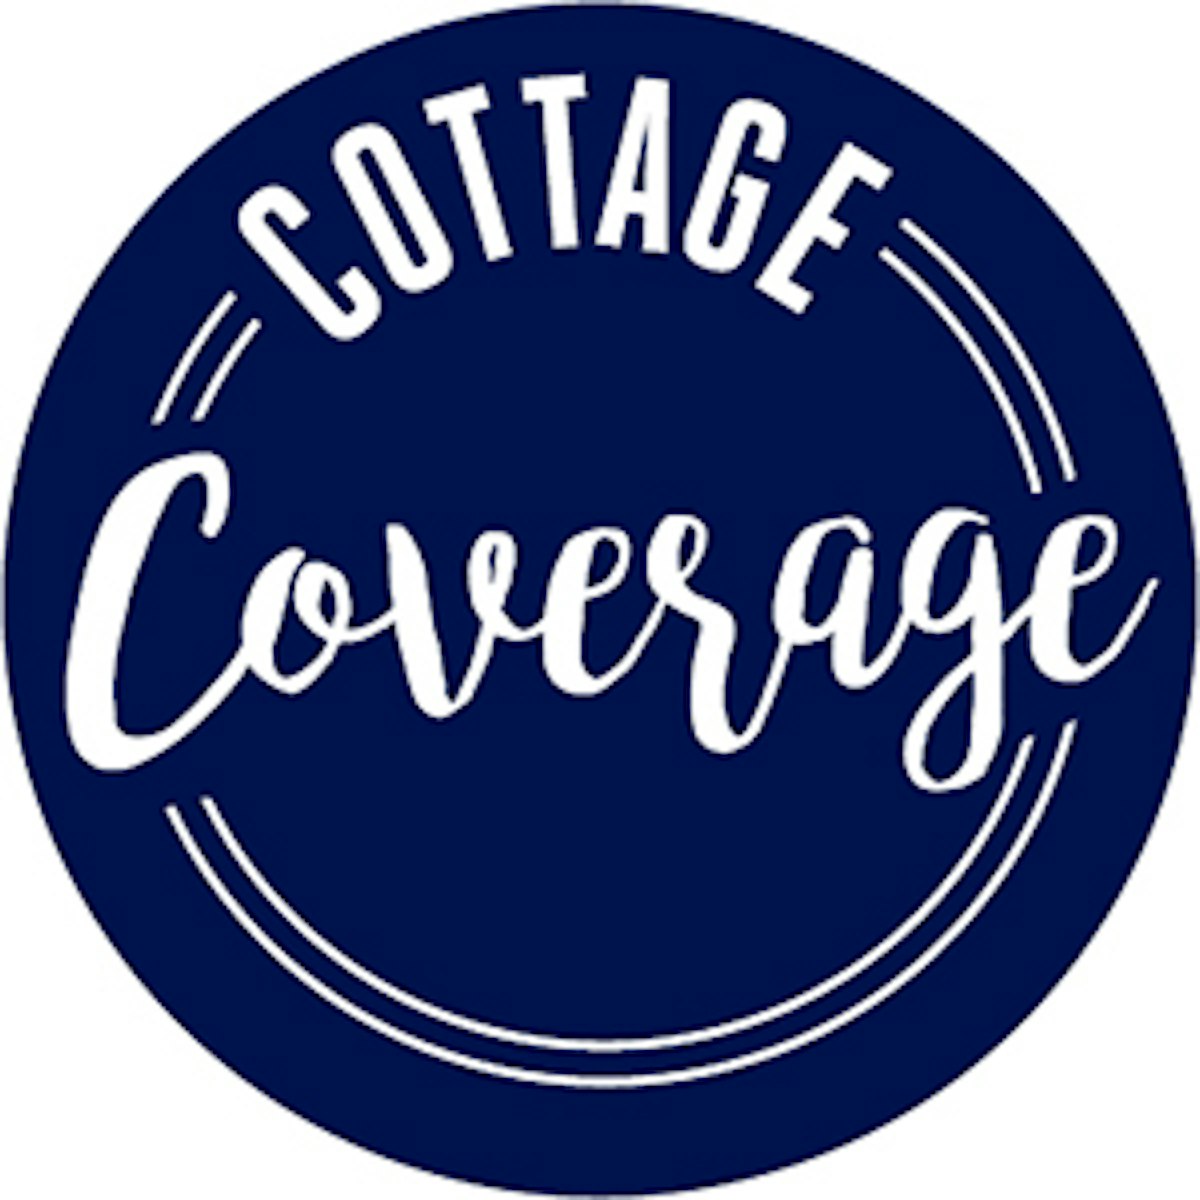 Cottage coverage logo.